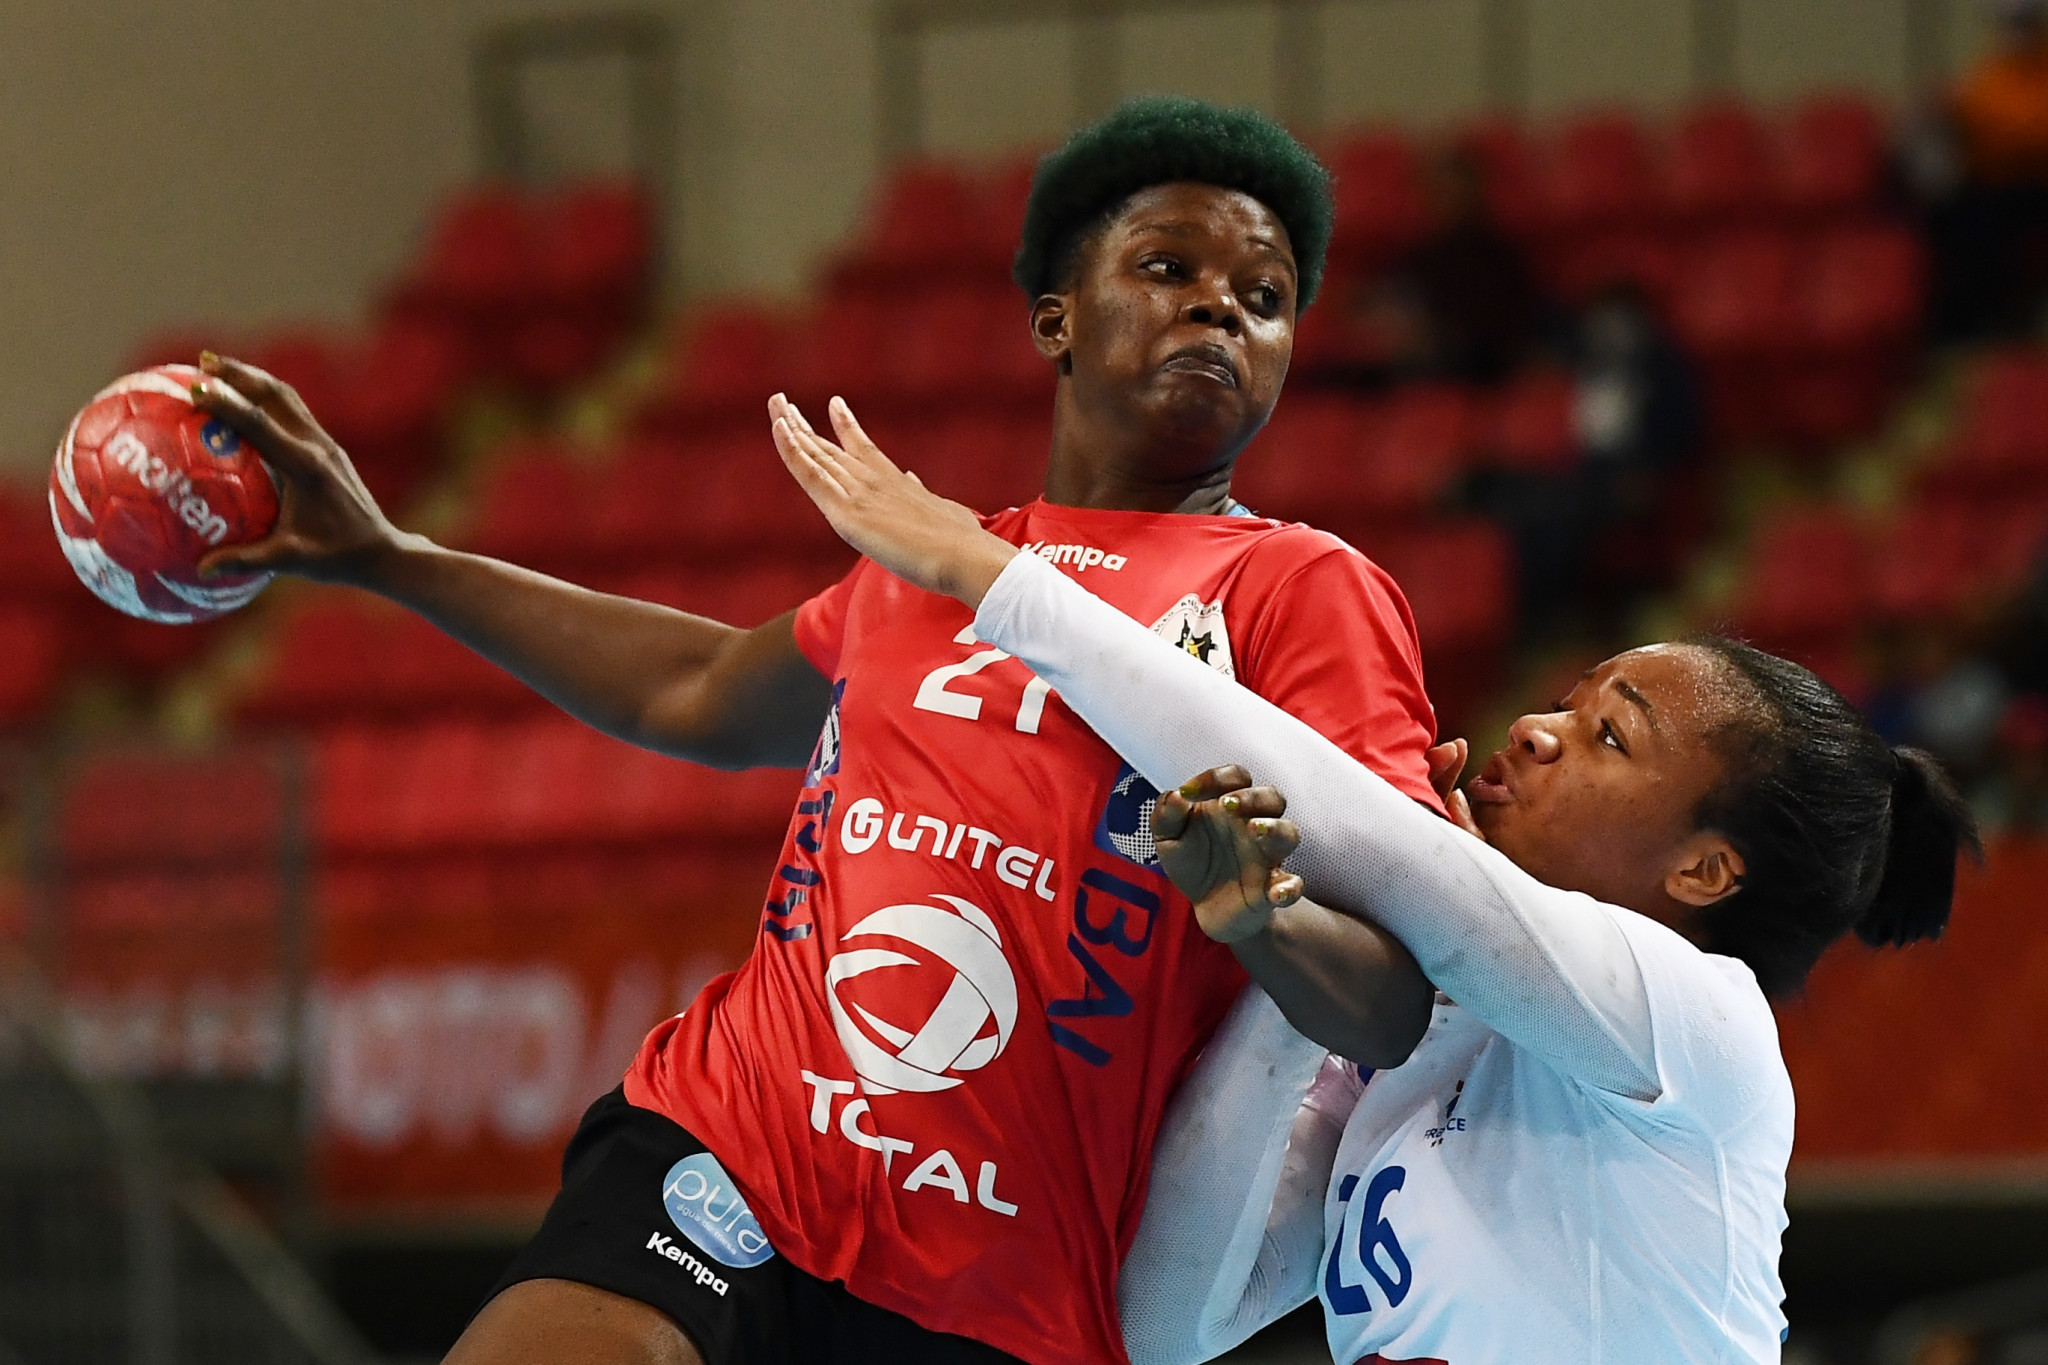 Angola overcome Cameroon to win third consecutive African Women's Handball Championship